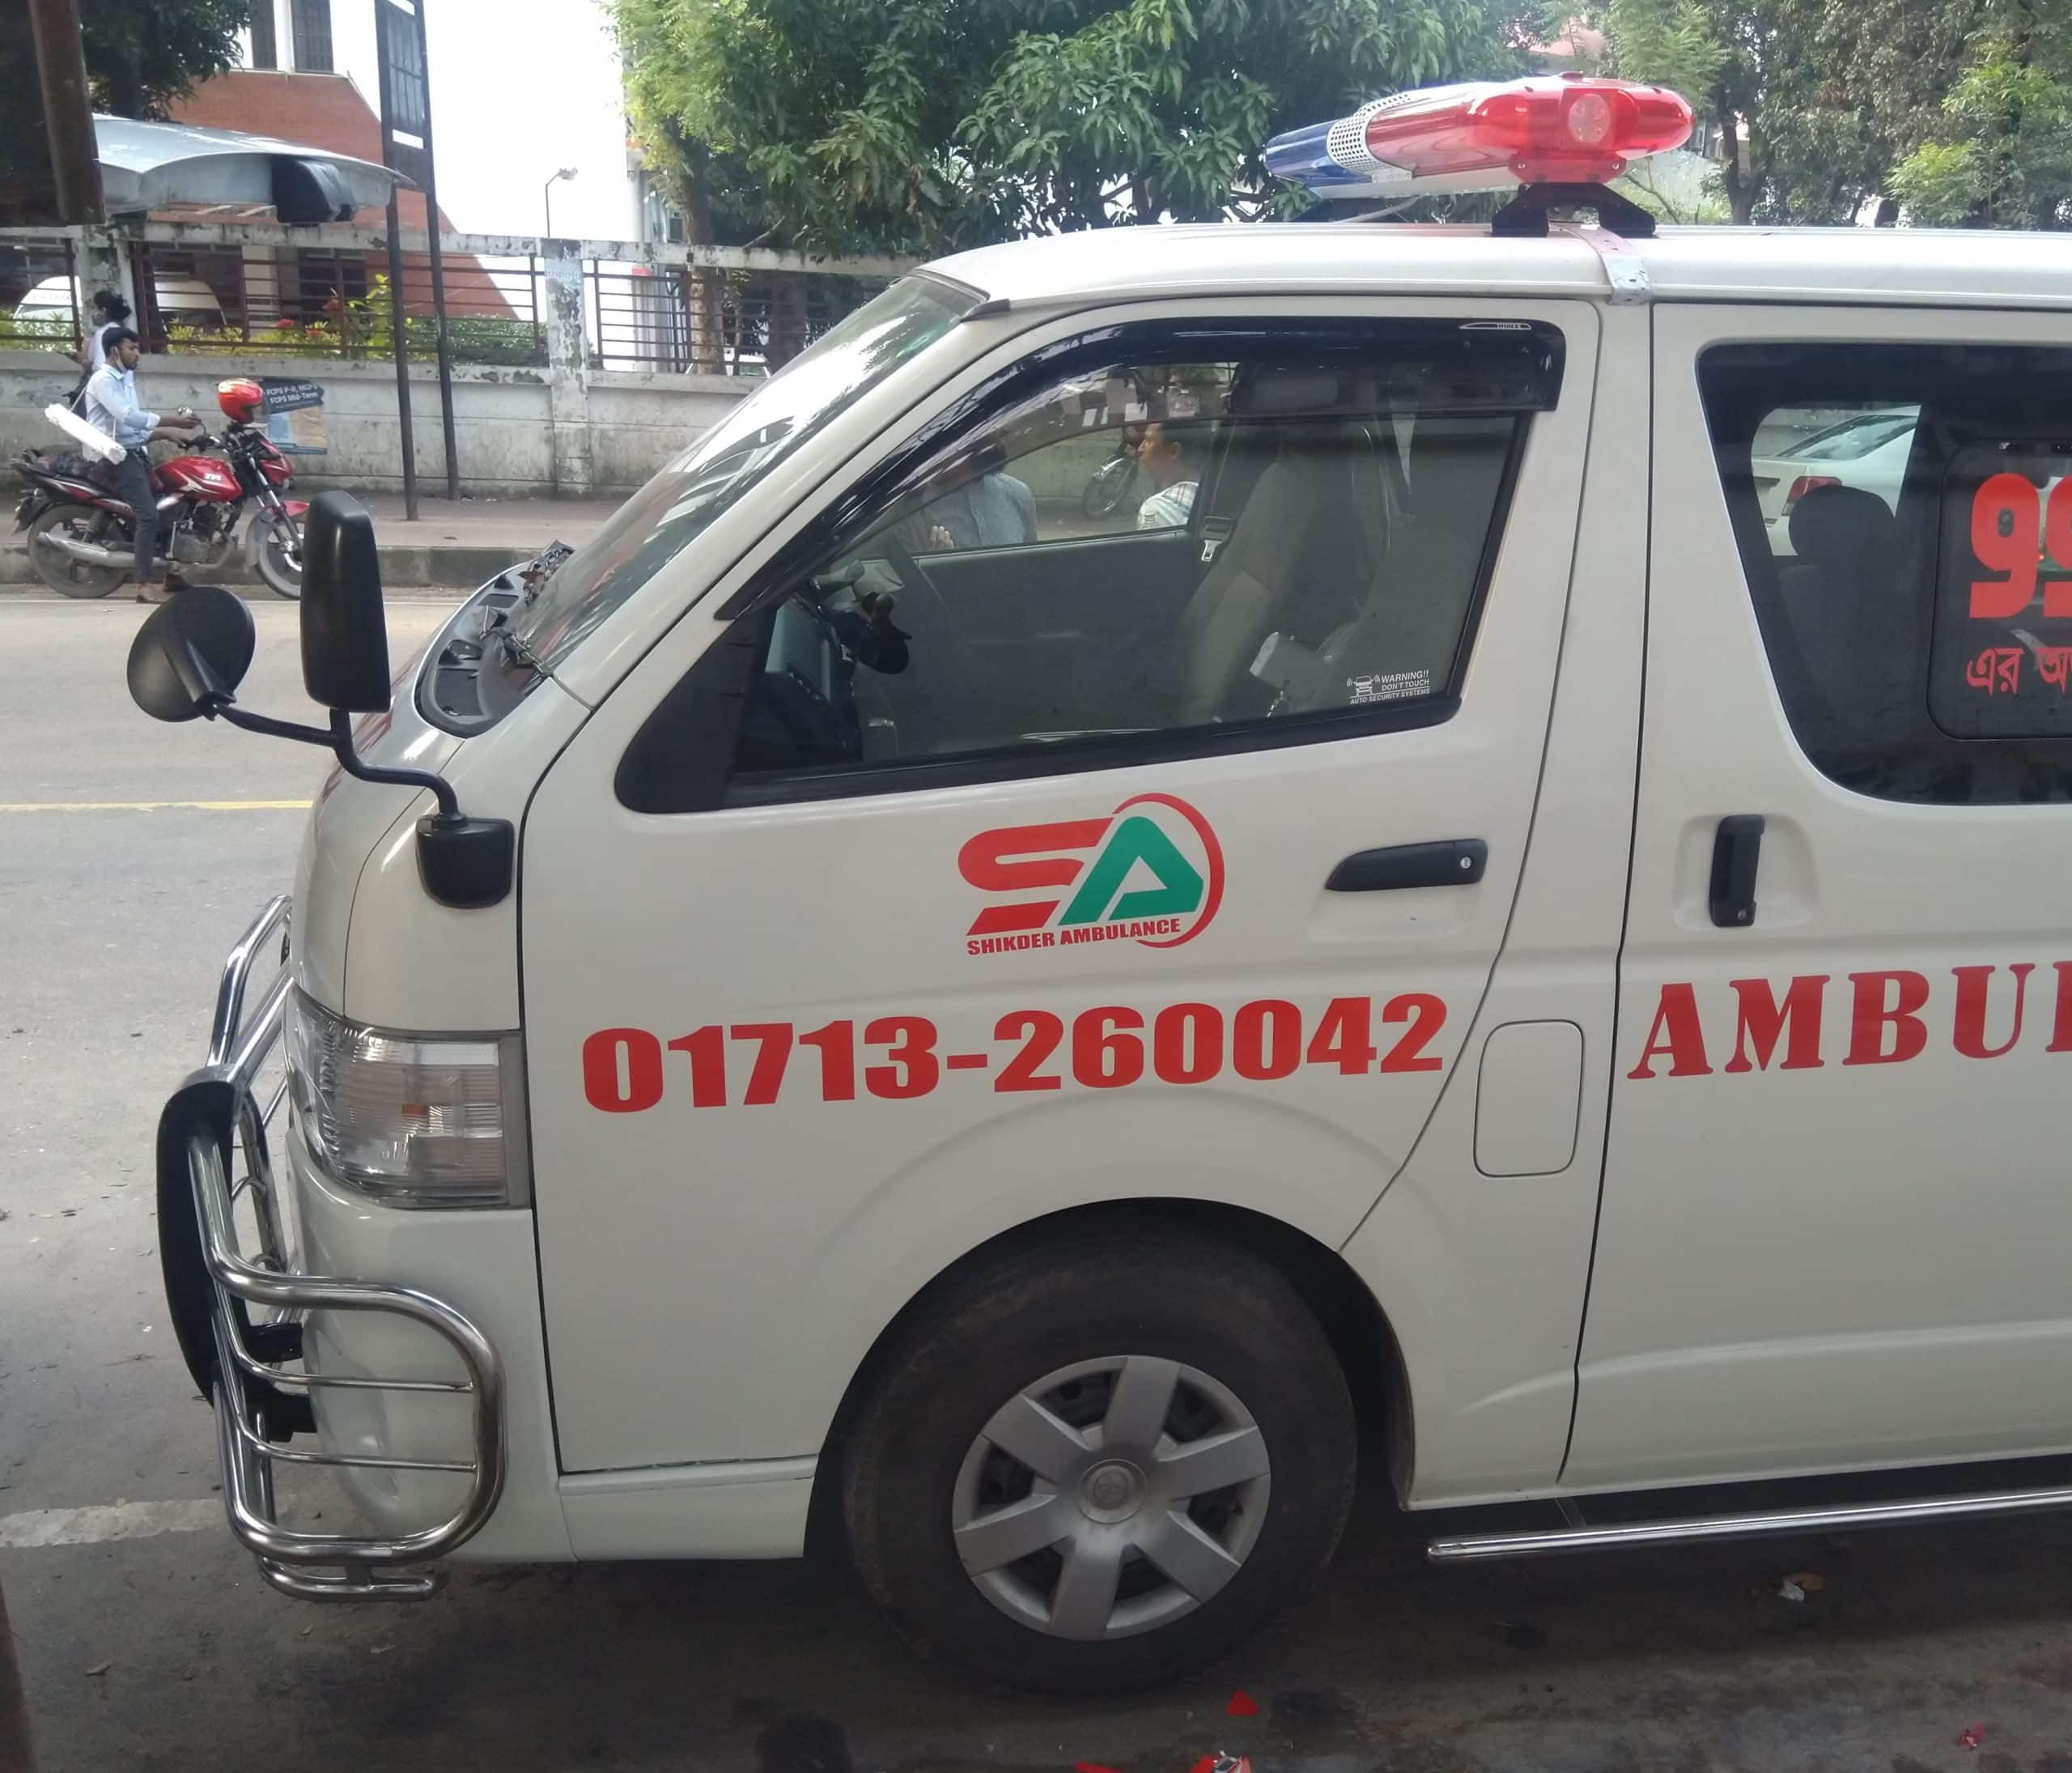 Meherpur-ambulance-service